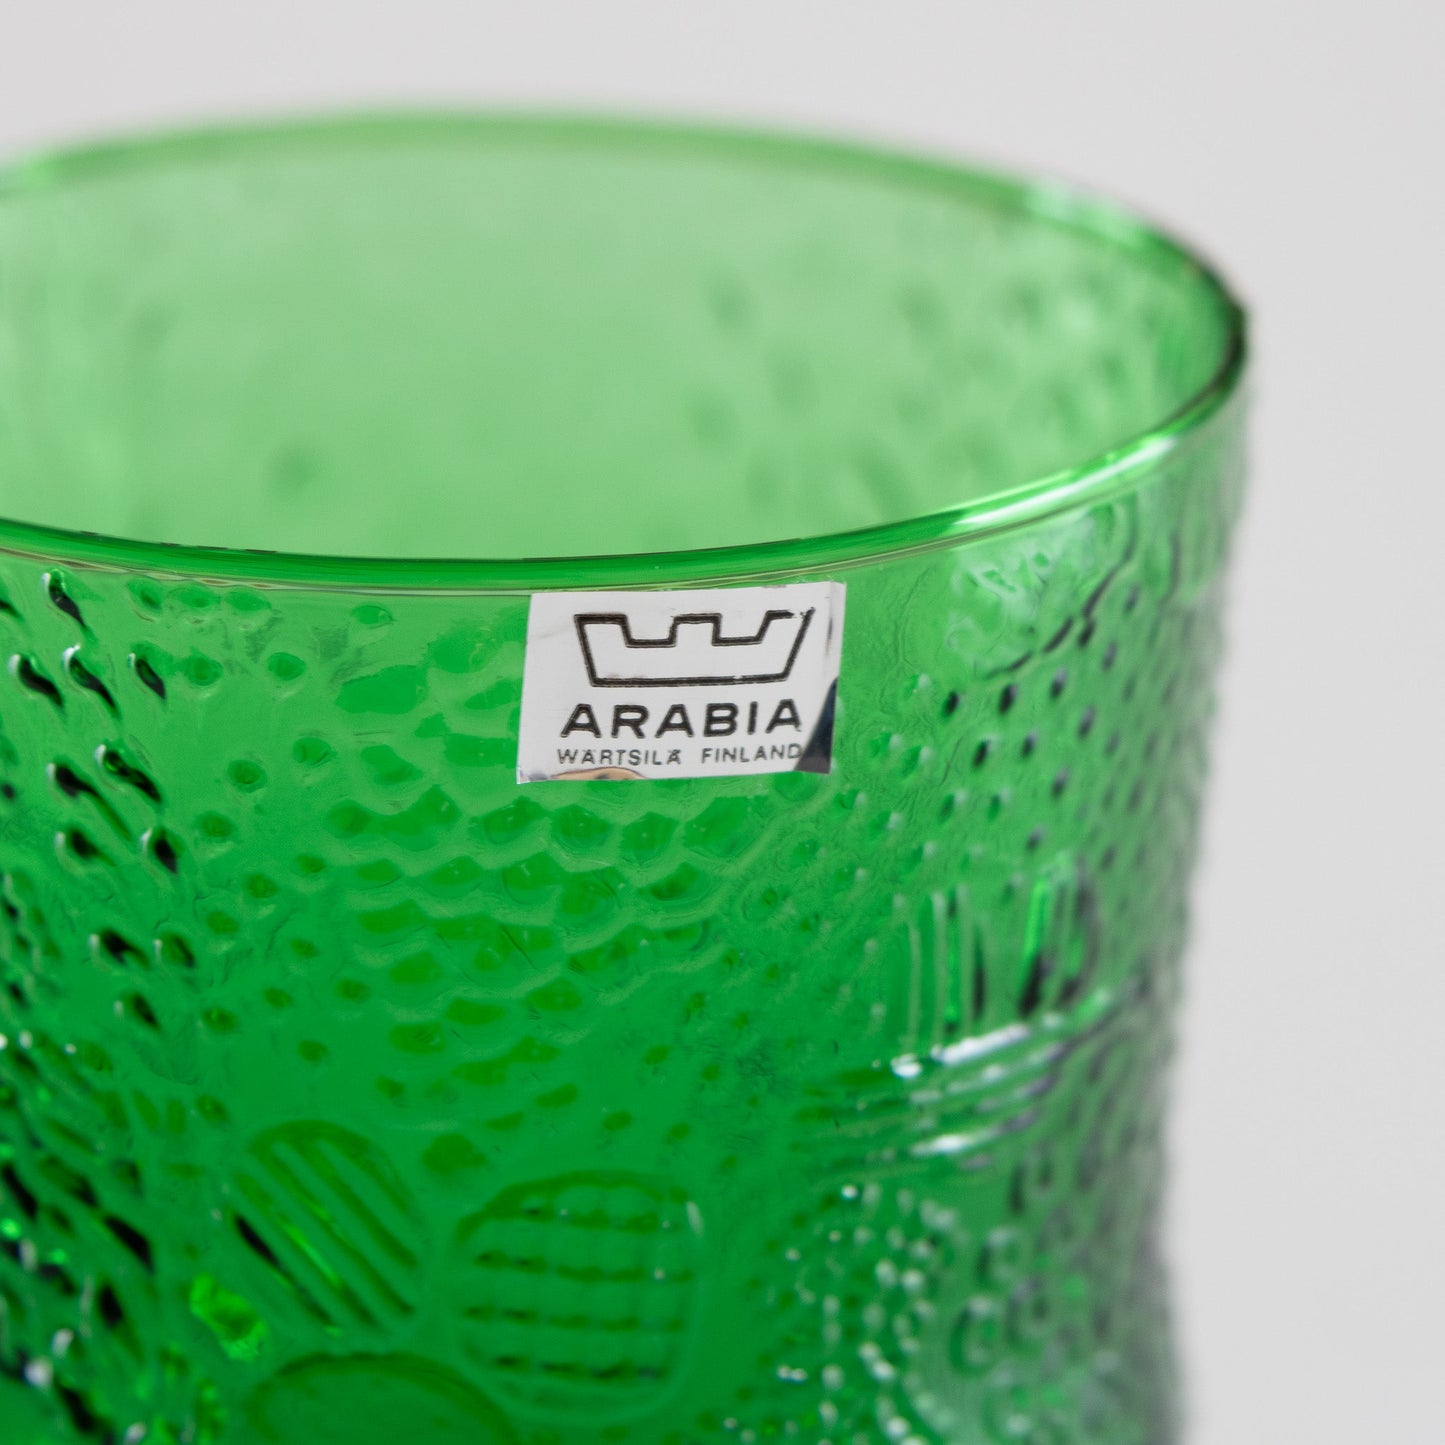 fauna (ファウナ) glass / arabia (アラビア)